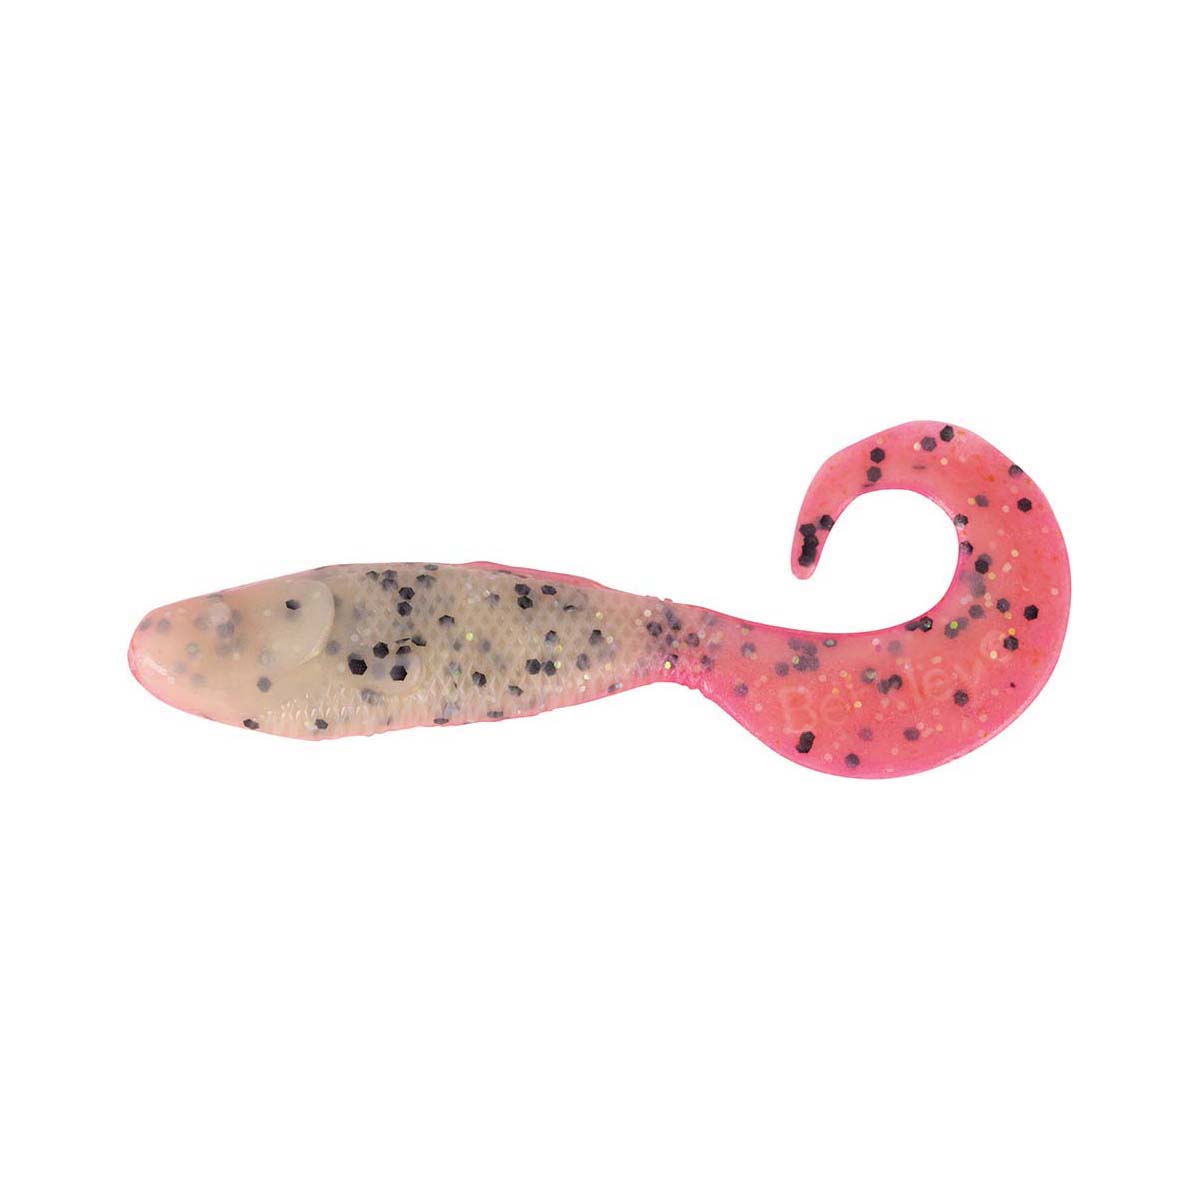 Berkley Gulp! Minnow Grub Soft Plastic Lure 3in Pink Belly Shrimp